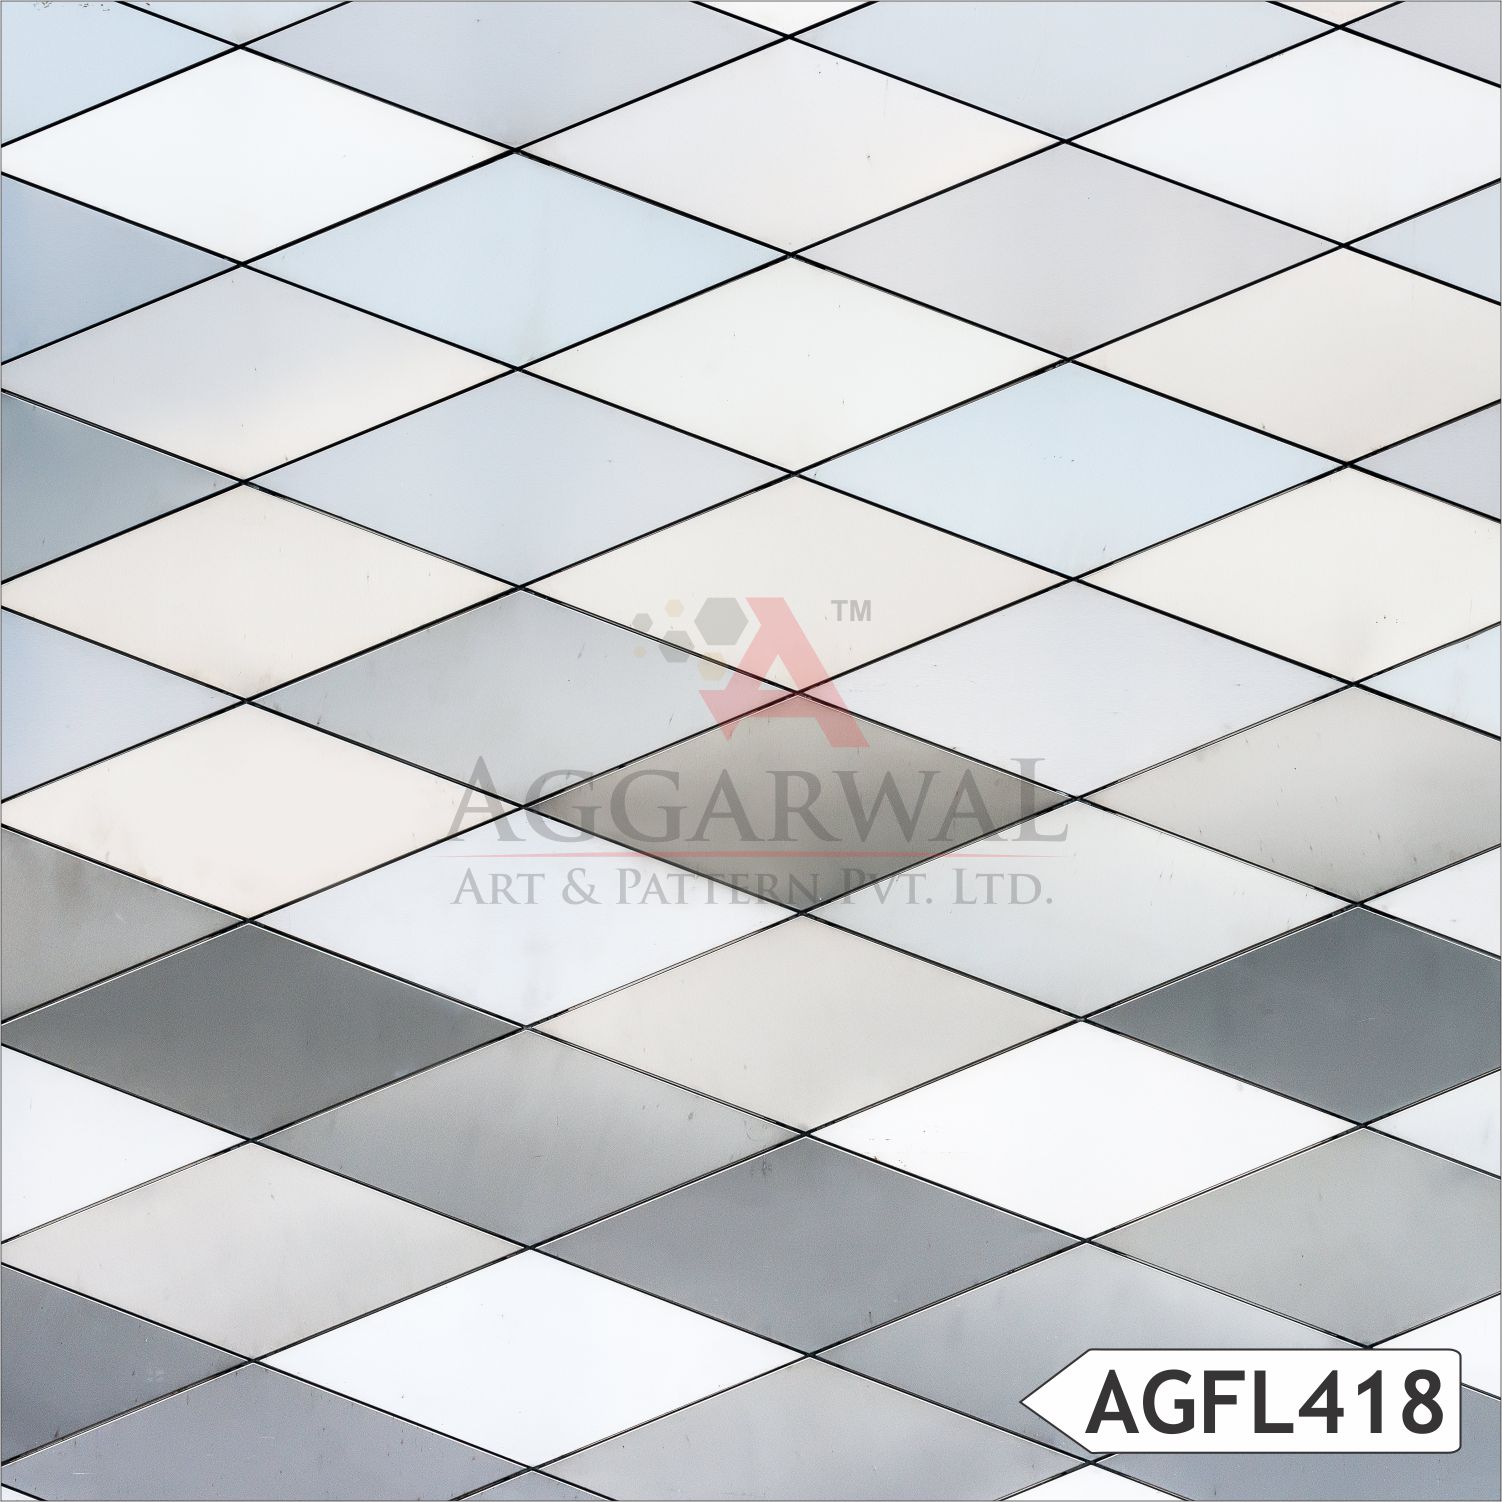 DESIGN CODE - AGFL418